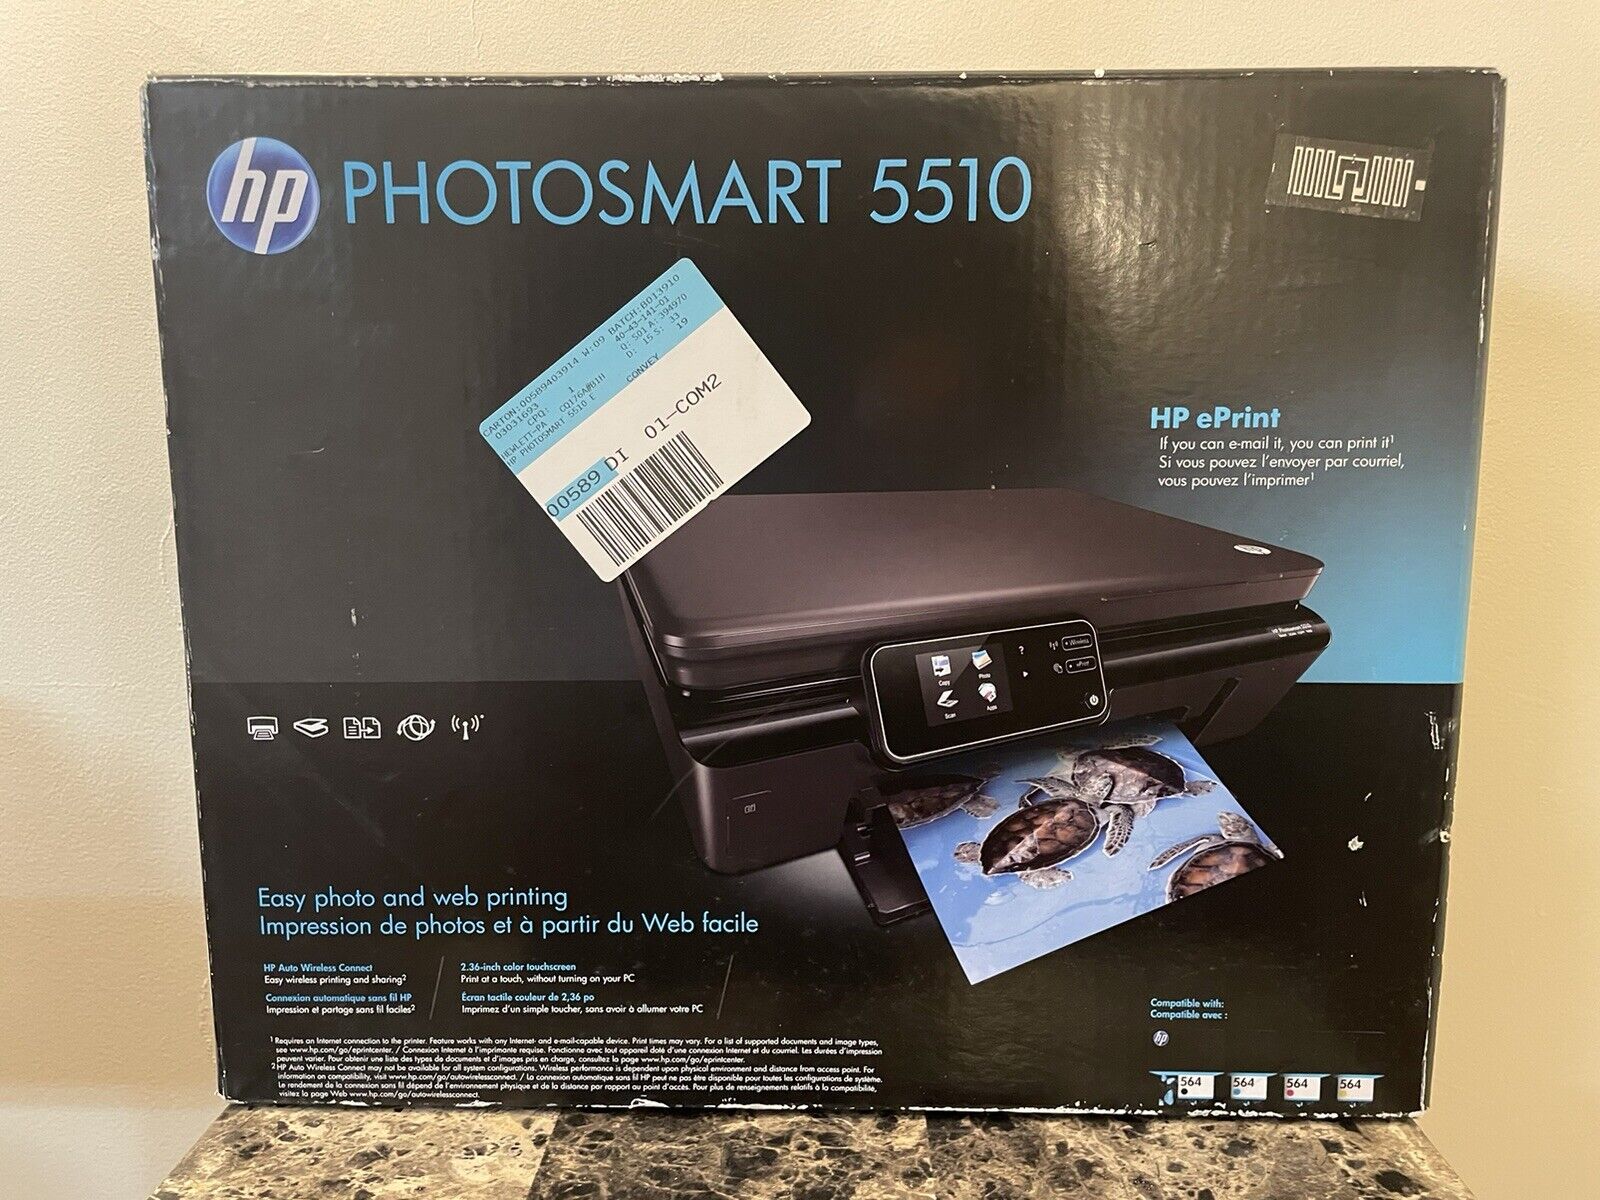 HP Photosmart 5510e All-in-One Wireless Photo Printer e-Print B111a New